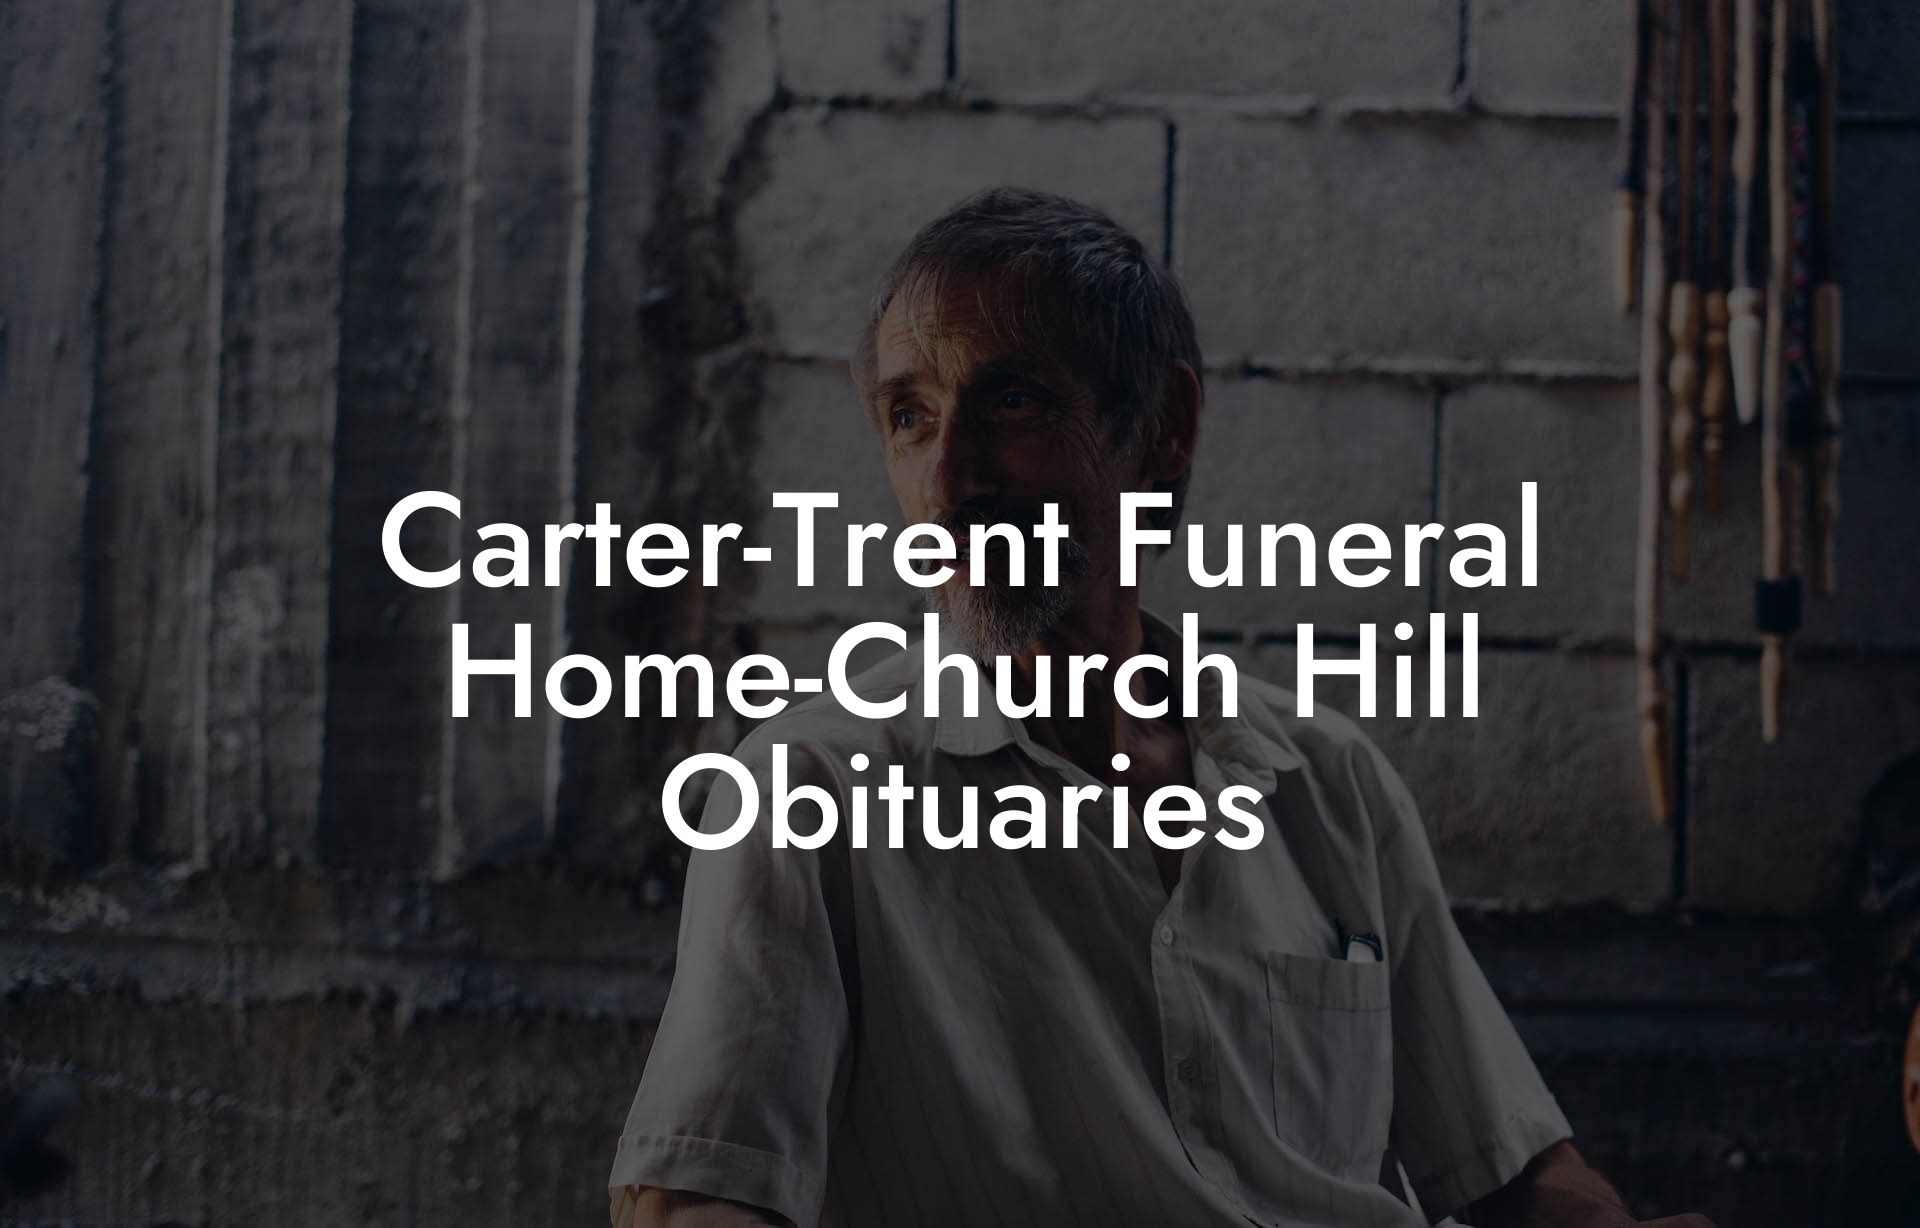 Carter-Trent Funeral Home-Church Hill Obituaries